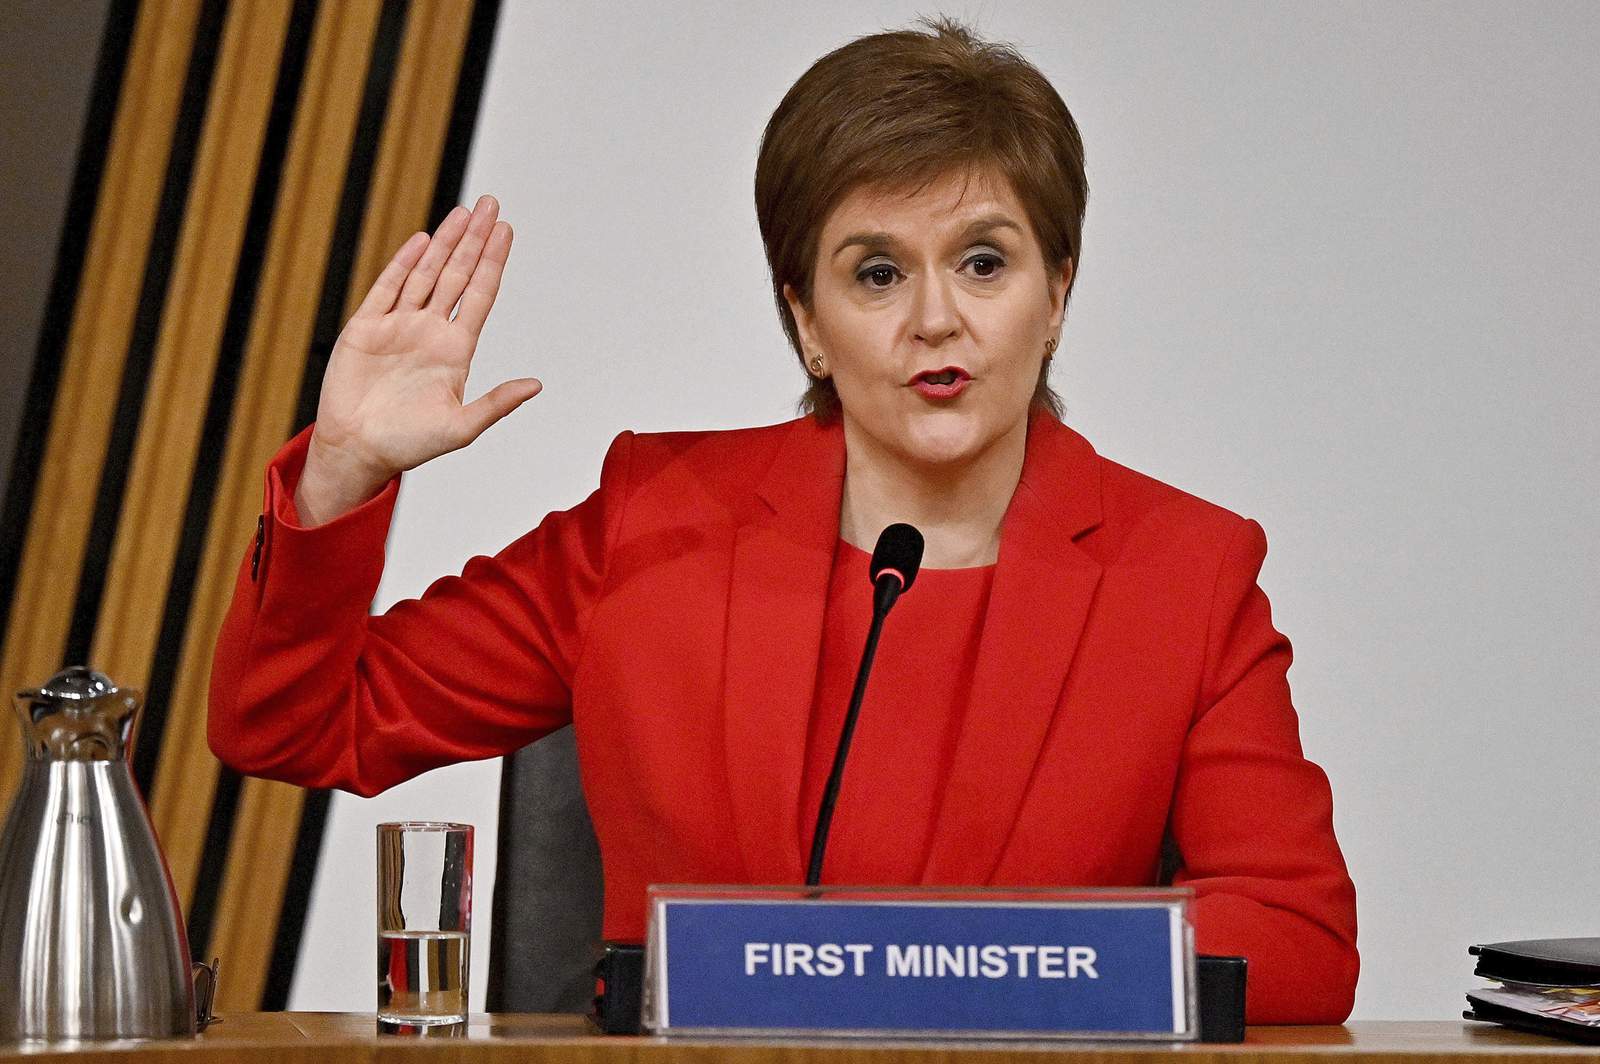 Under fire, Scottish leader defends handling of sex claims